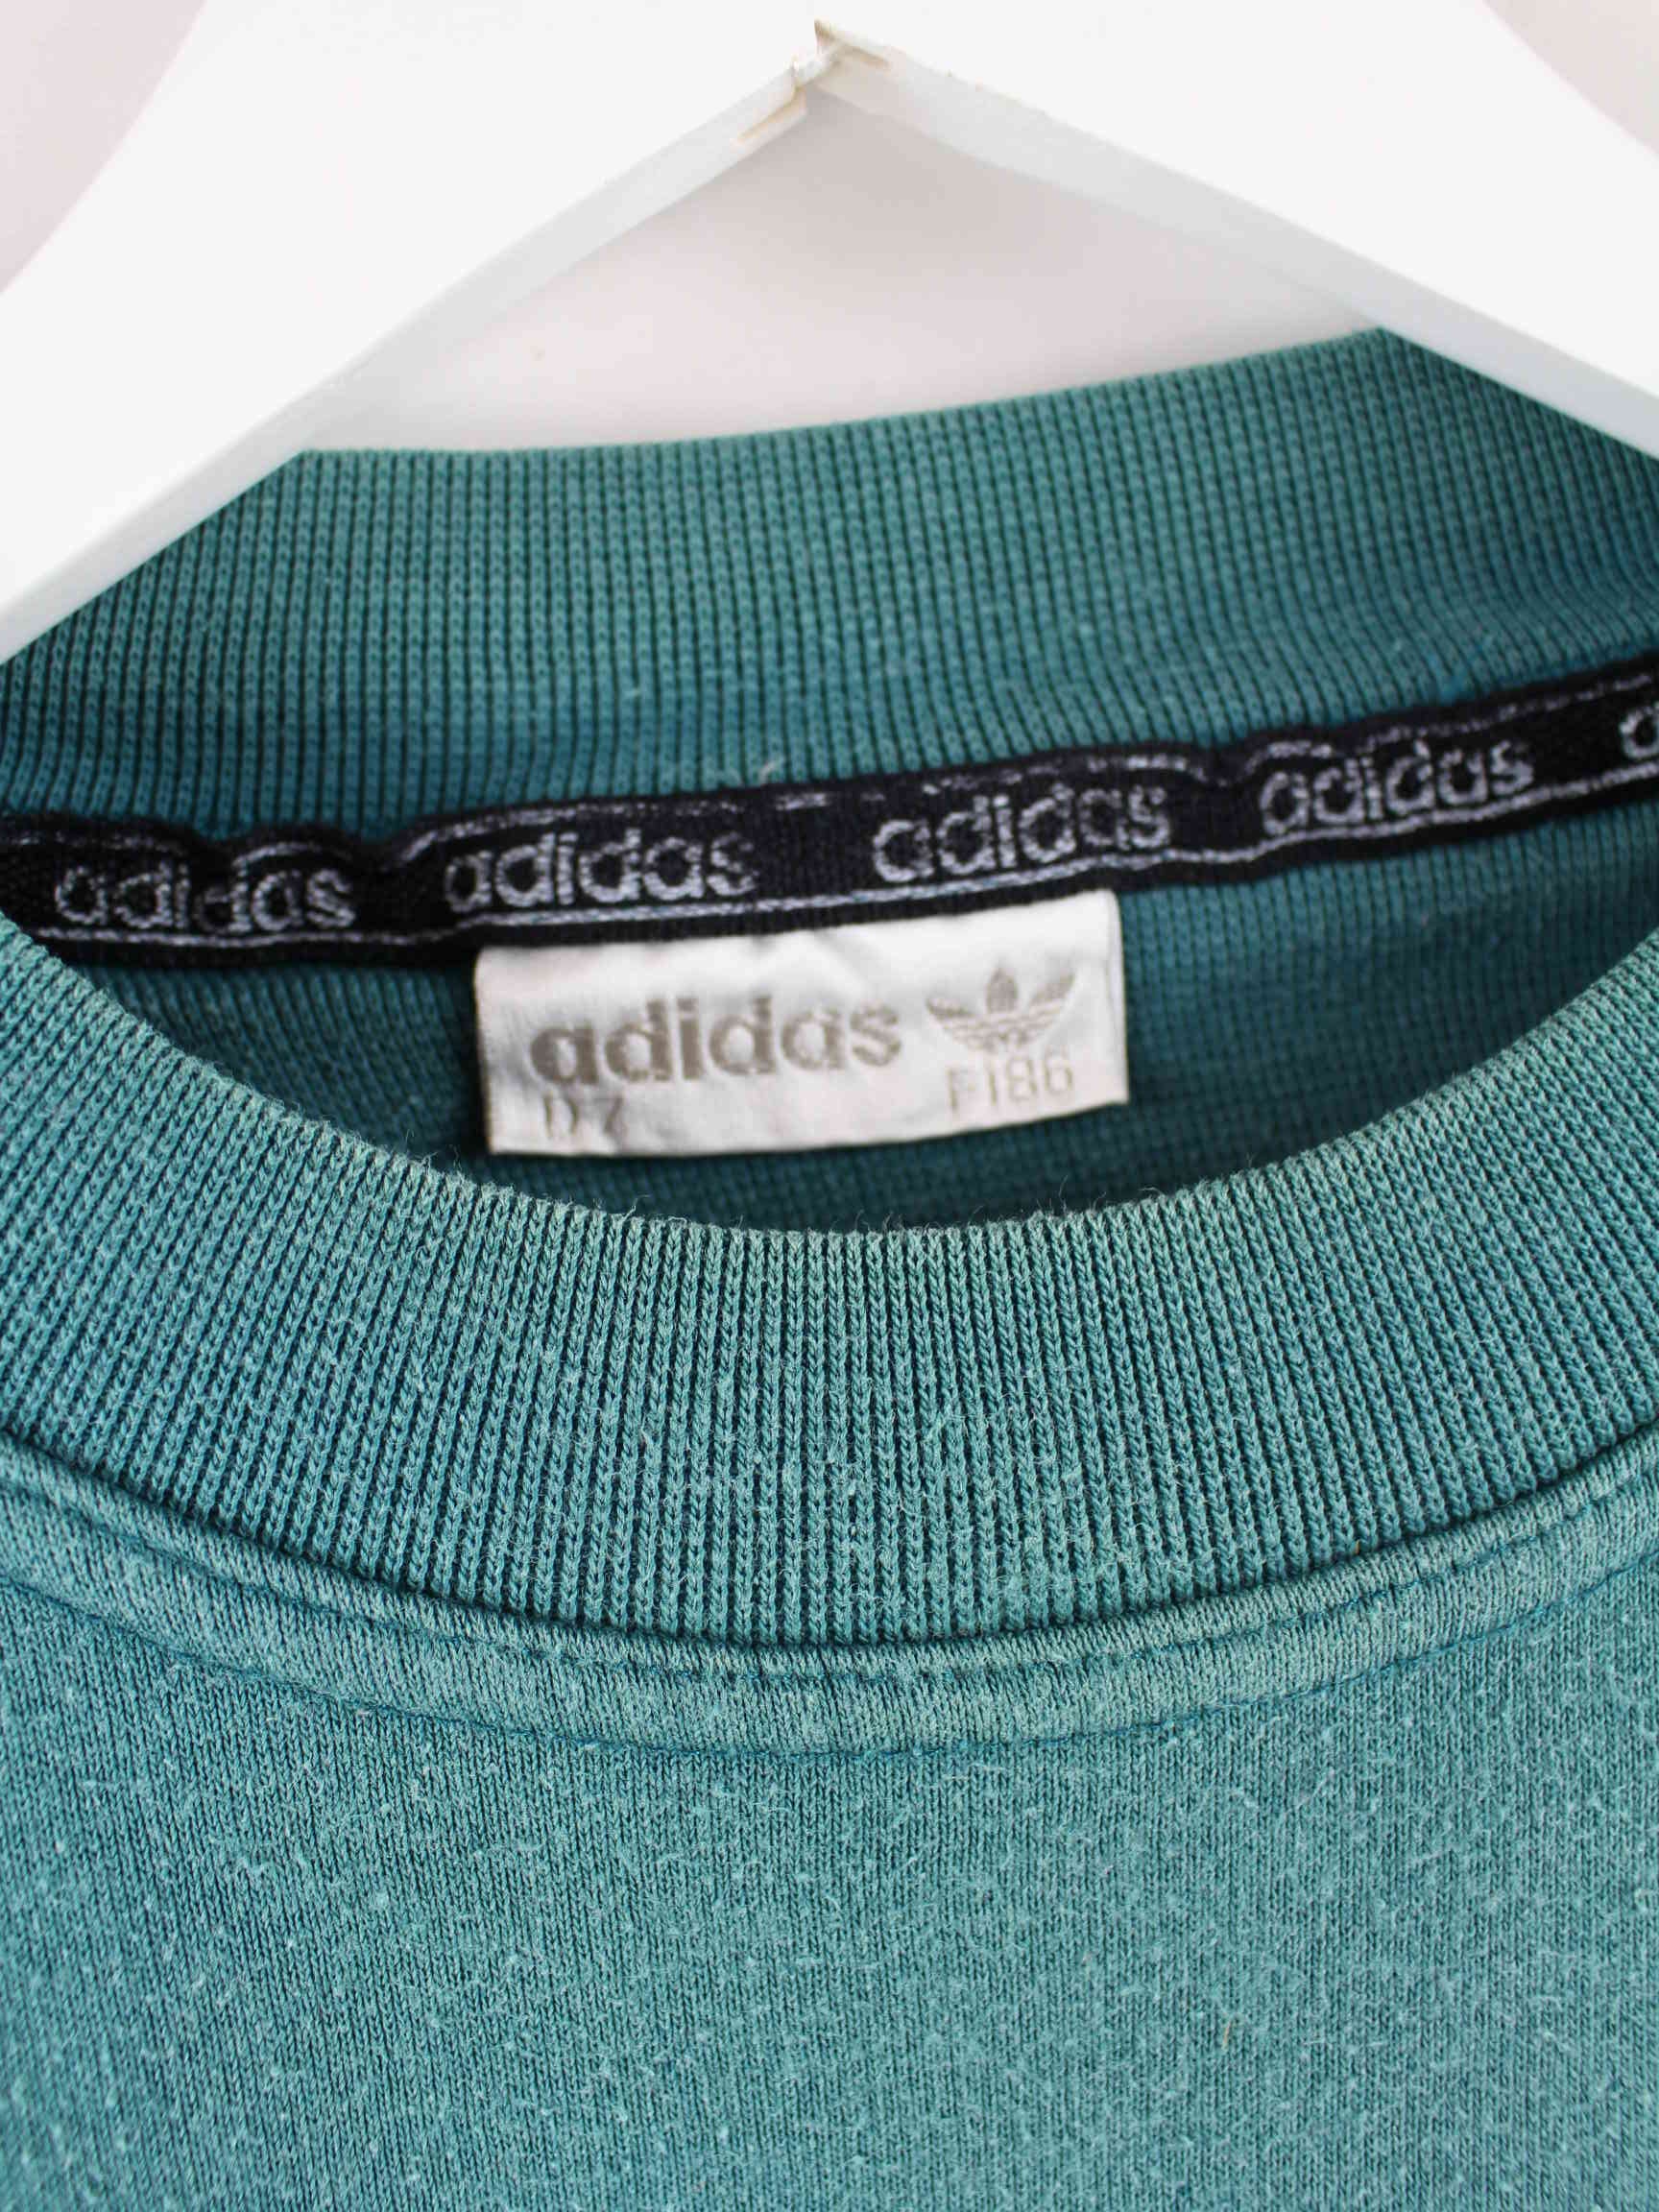 Adidas 80s Vintage Trefoil Embroidered Sweater Grün S (detail image 2)